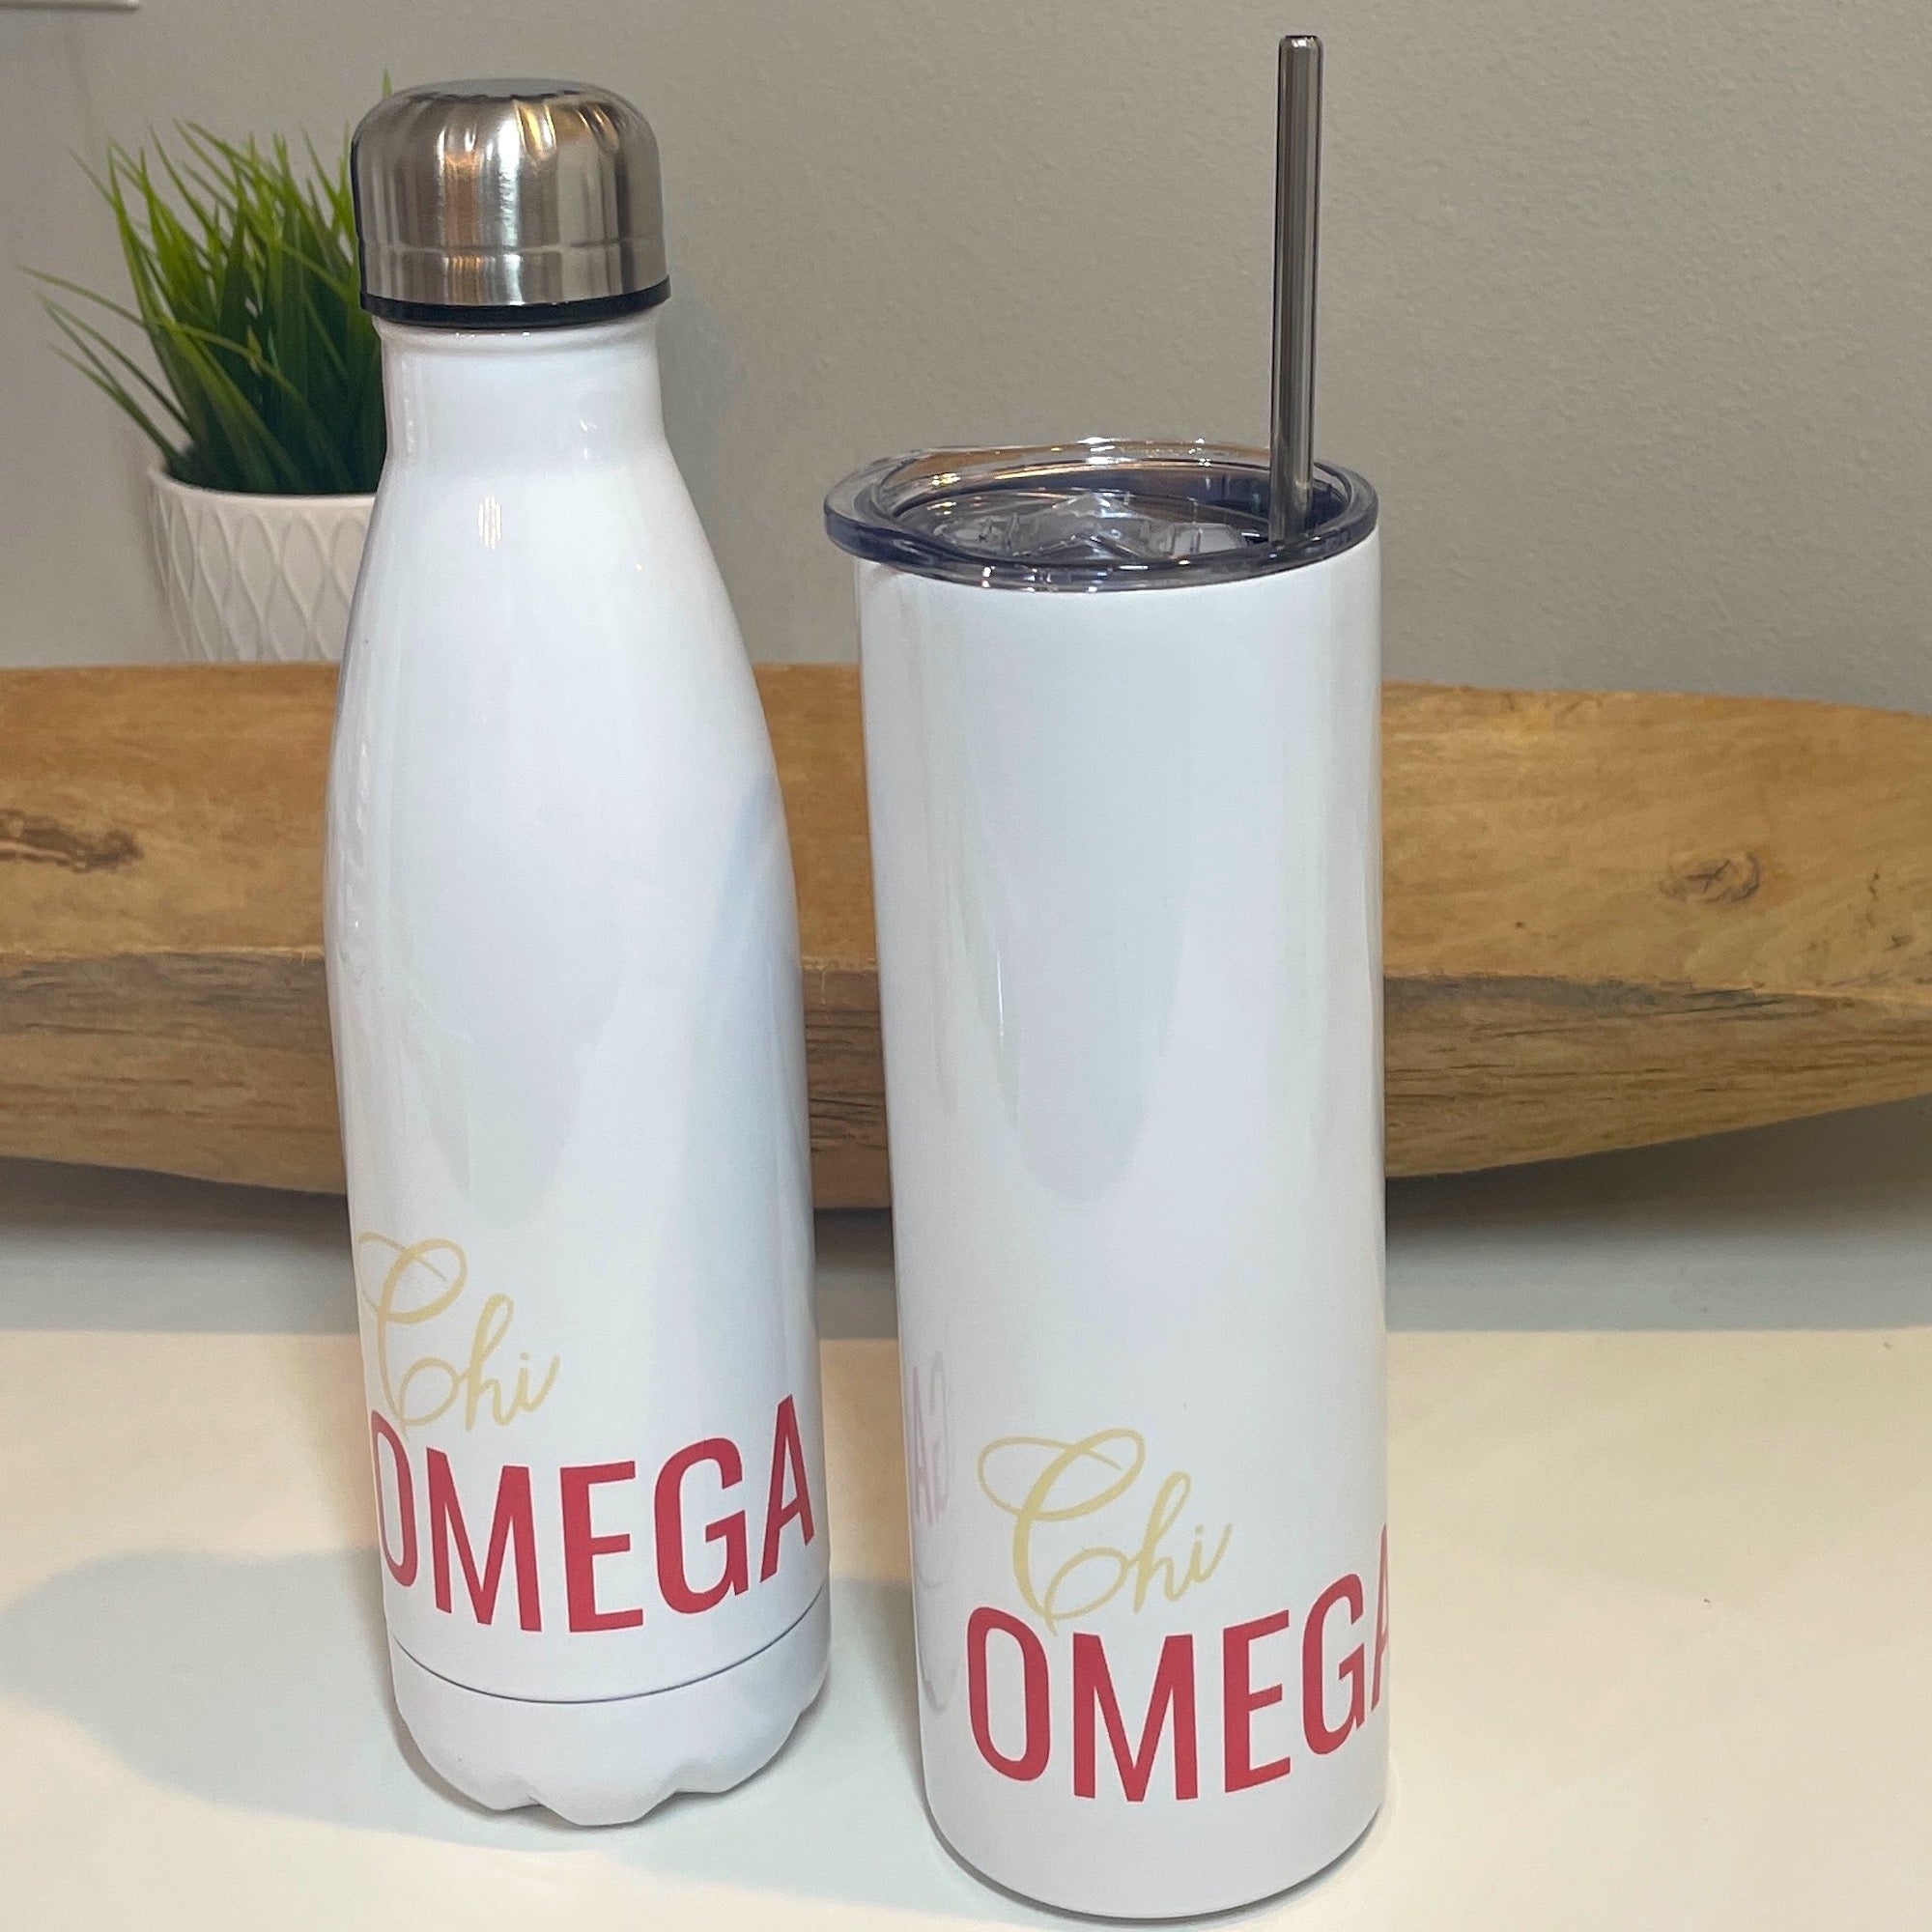 Chi Omega Water Bottle or Skinny Tumbler